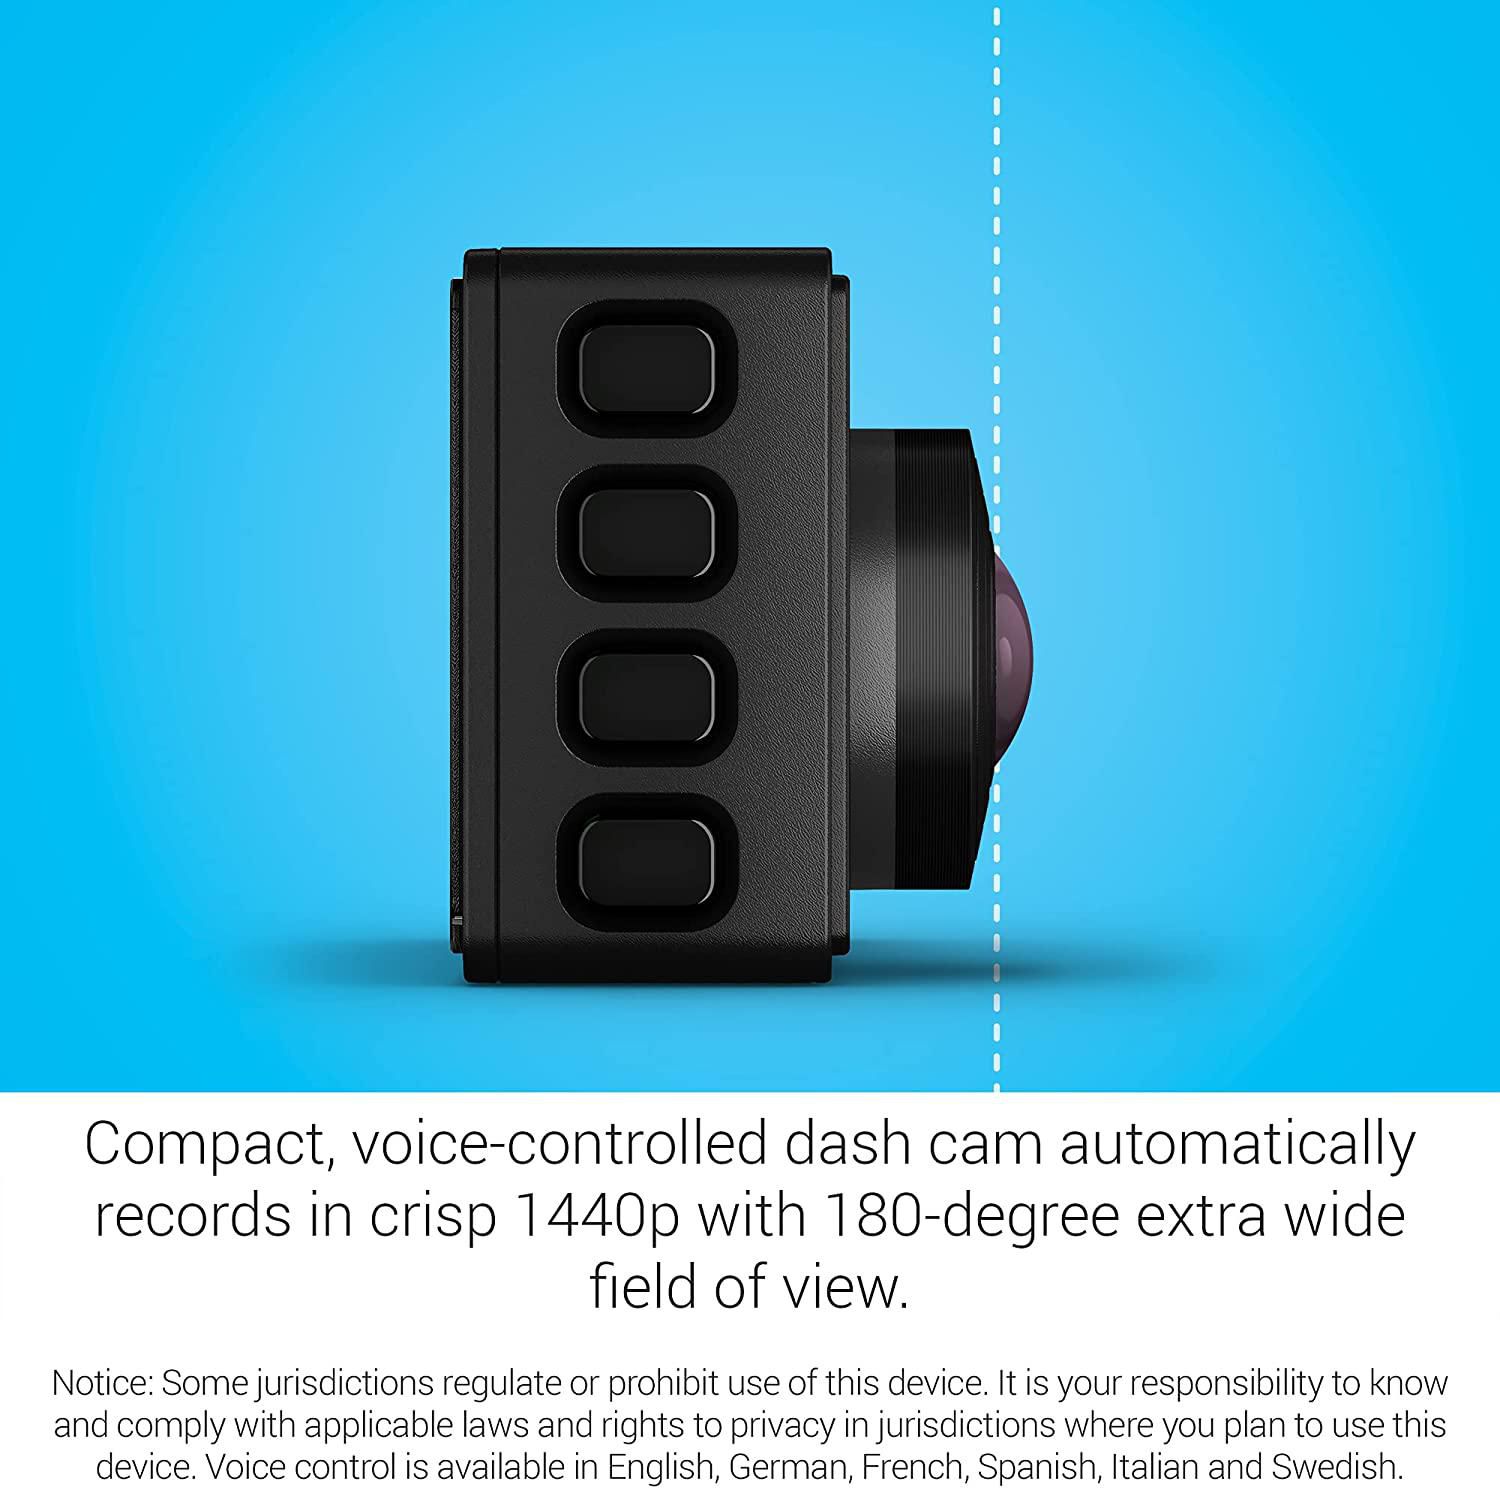 Garmin Dash Cam 67W, 1440p and Extra-Wide 180-degree FOV, Monitor